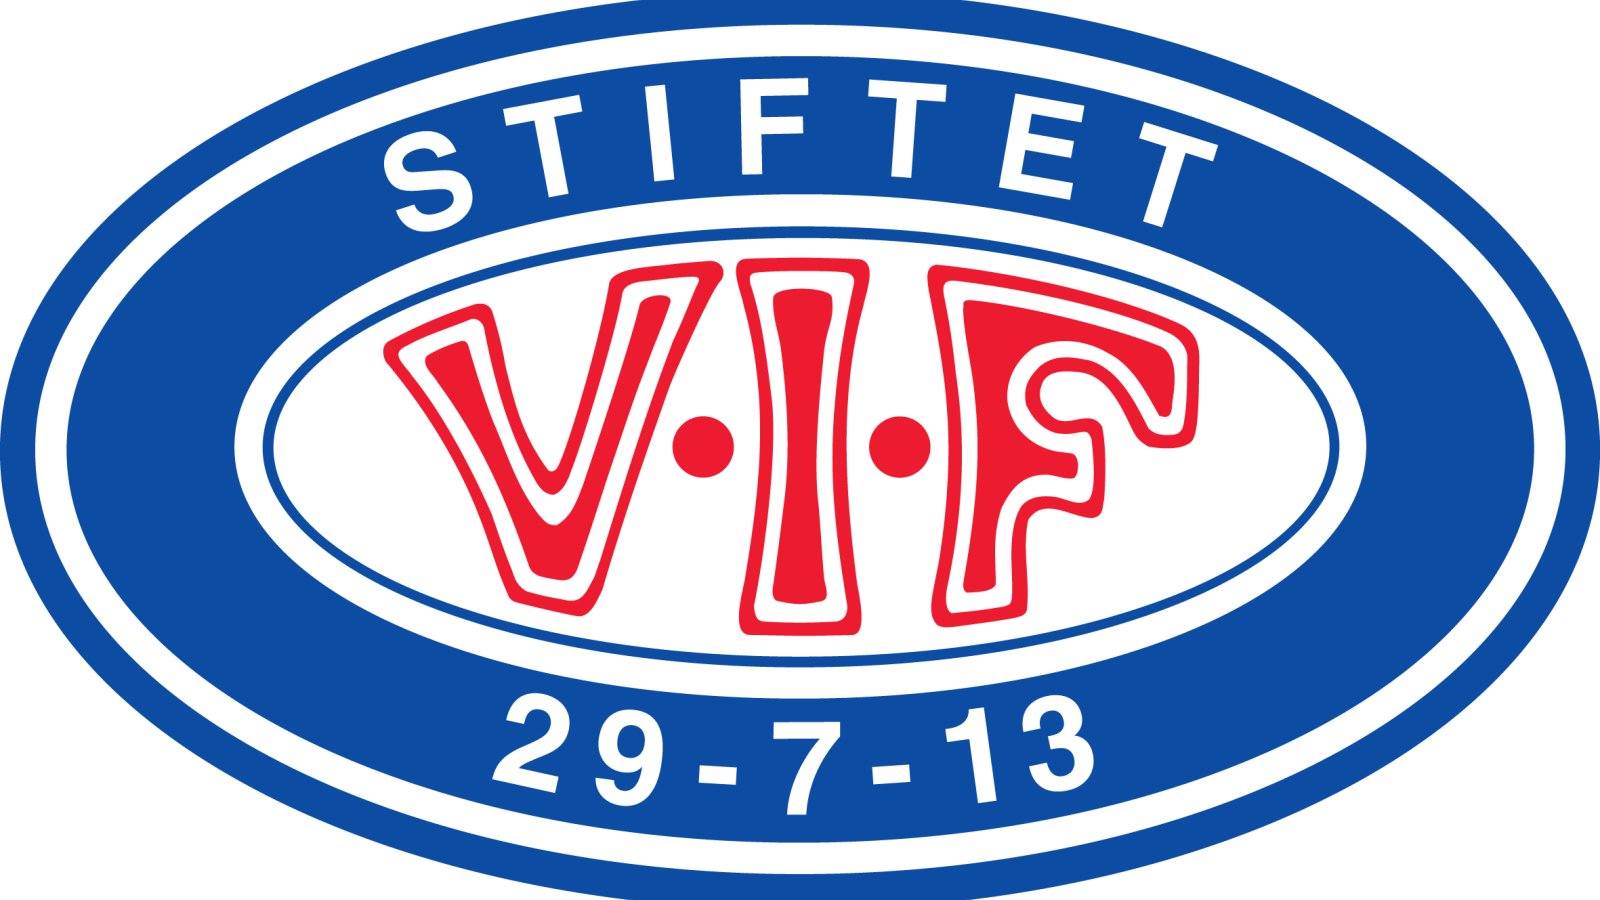 vif-logo-plain_1qt9plnbwgogd1gjpffm1tjmwn.jpg